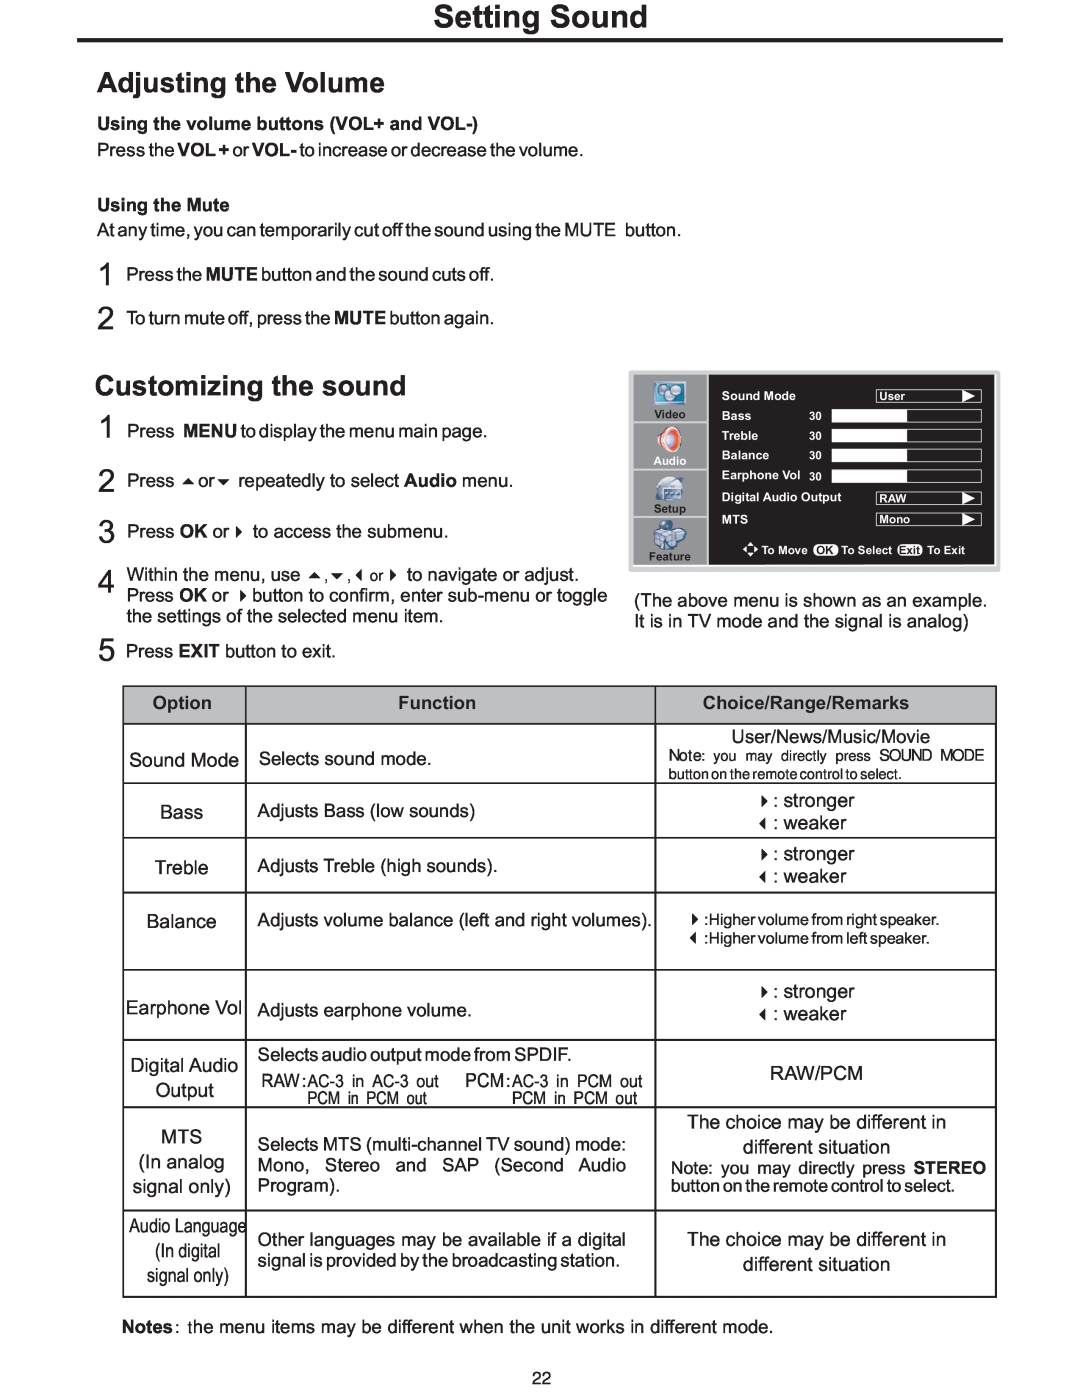 Polaroid PLA-4248 manual Setting Sound, Adjusting the Volume, Customizing the sound 